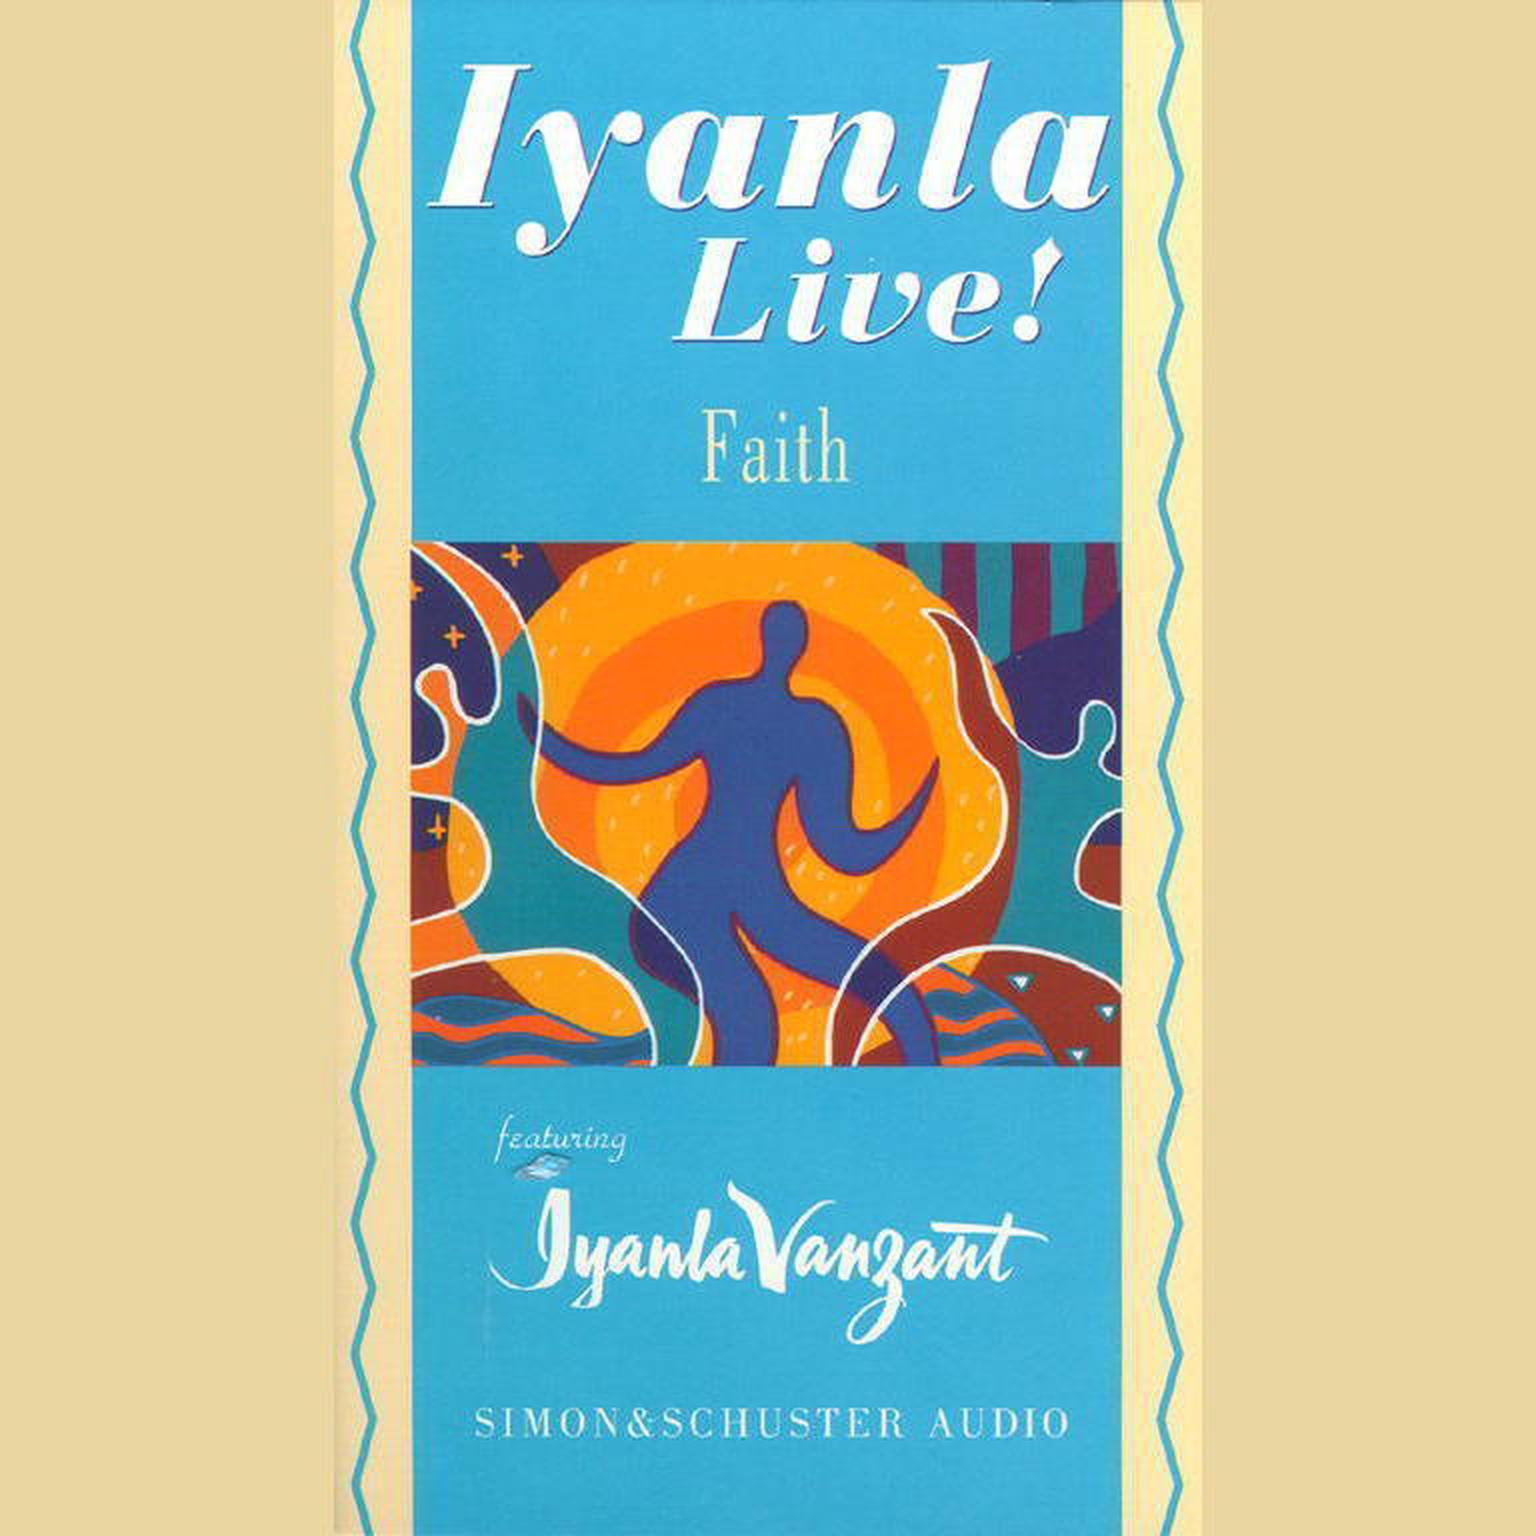 Iyanla Live! Faith (Abridged) Audiobook, by Iyanla Vanzant